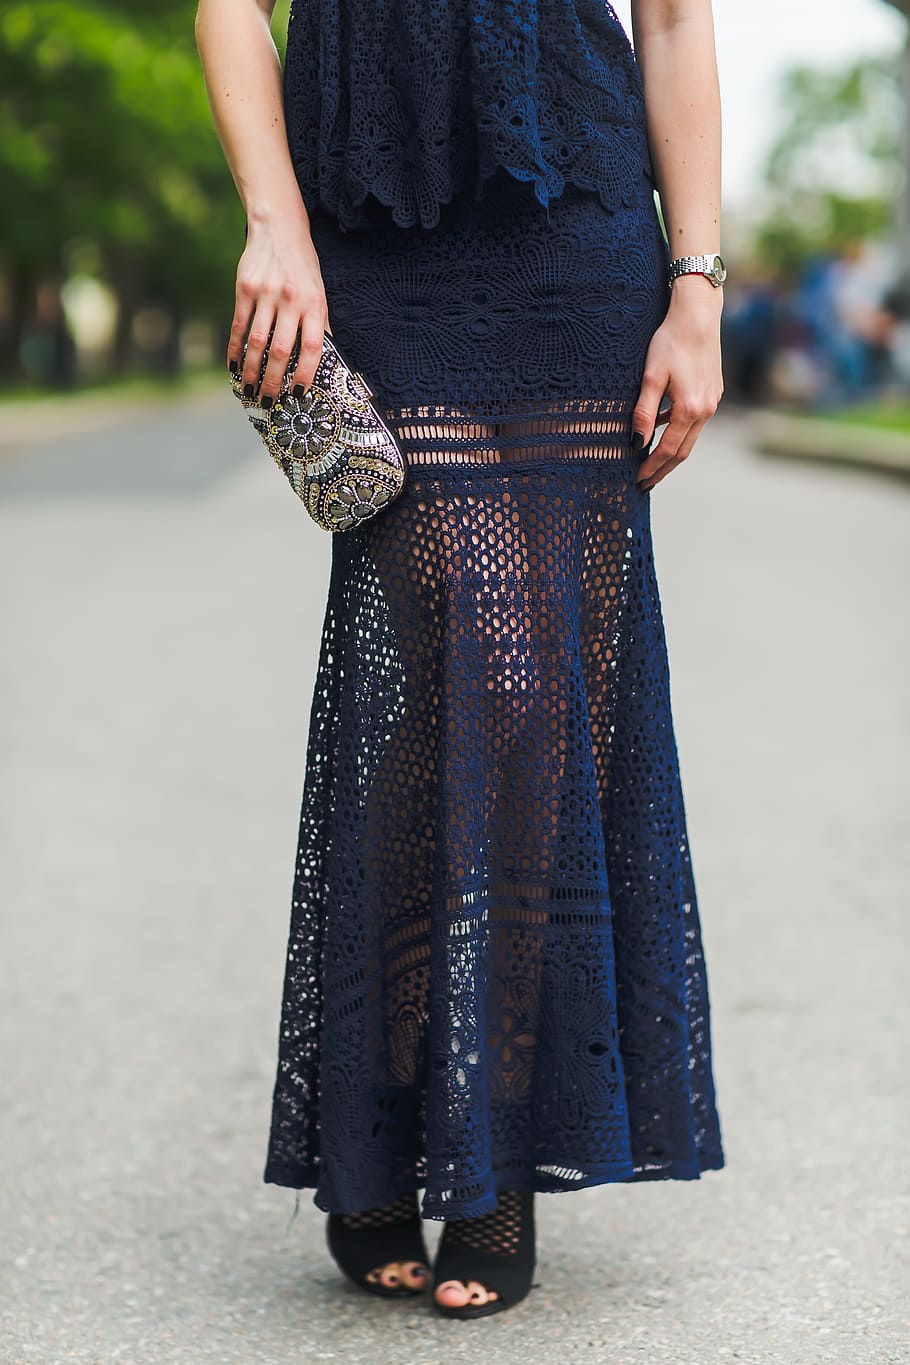 woman, wearing, blue, lace dress, black, peep-toe sandal, standing, asphalt road, daytime, women's